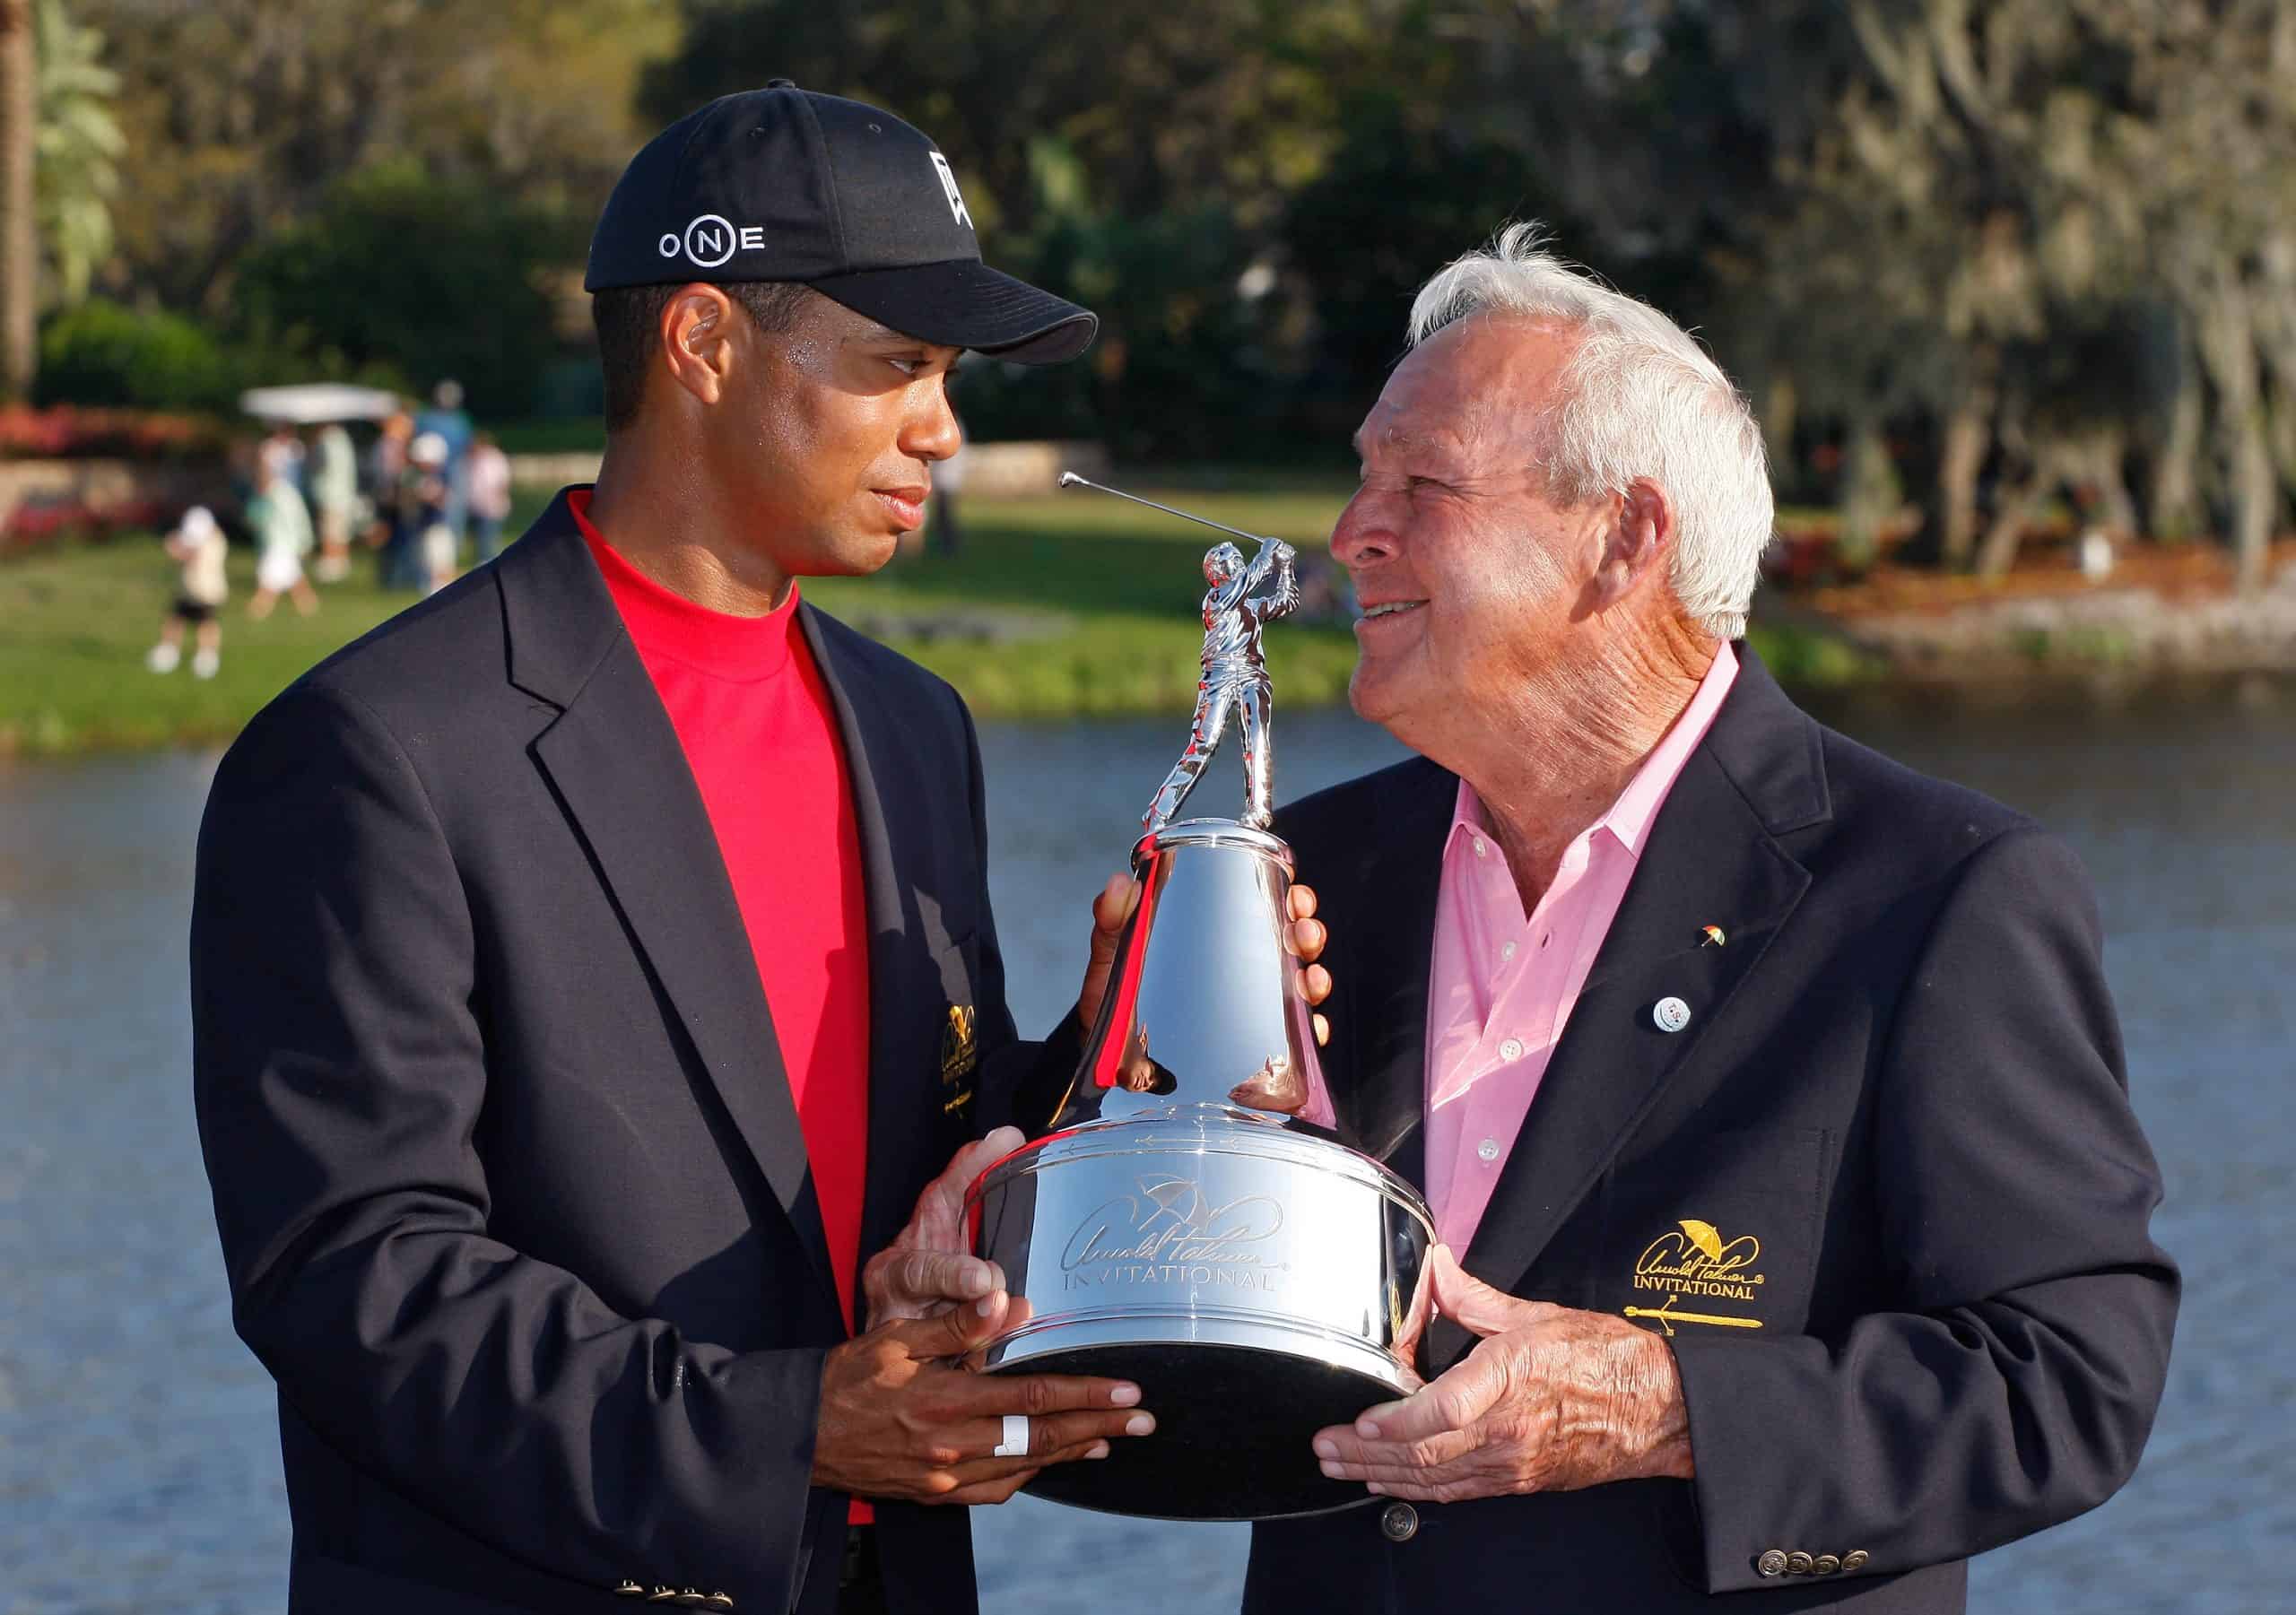 Arnold Paler met with Tiger Woods